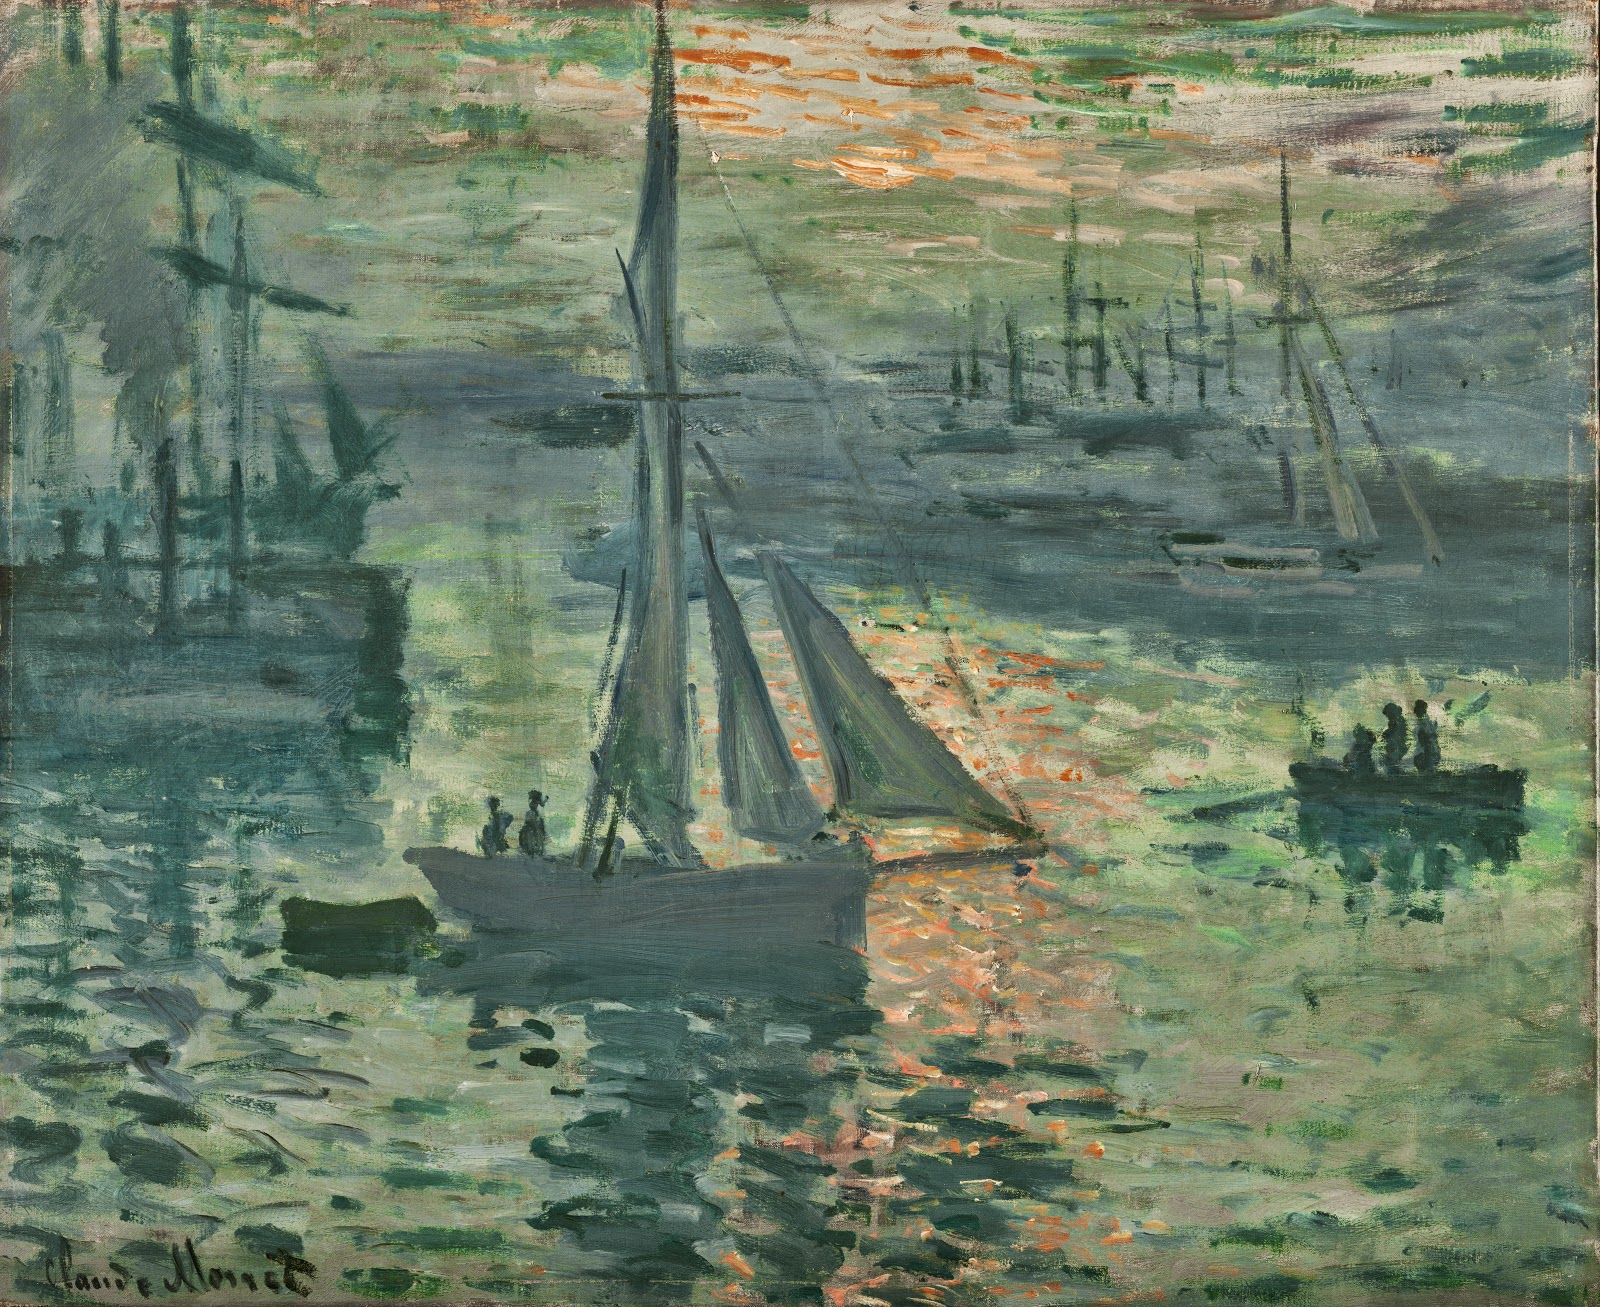 Claude+Monet-1840-1926 (521).jpg